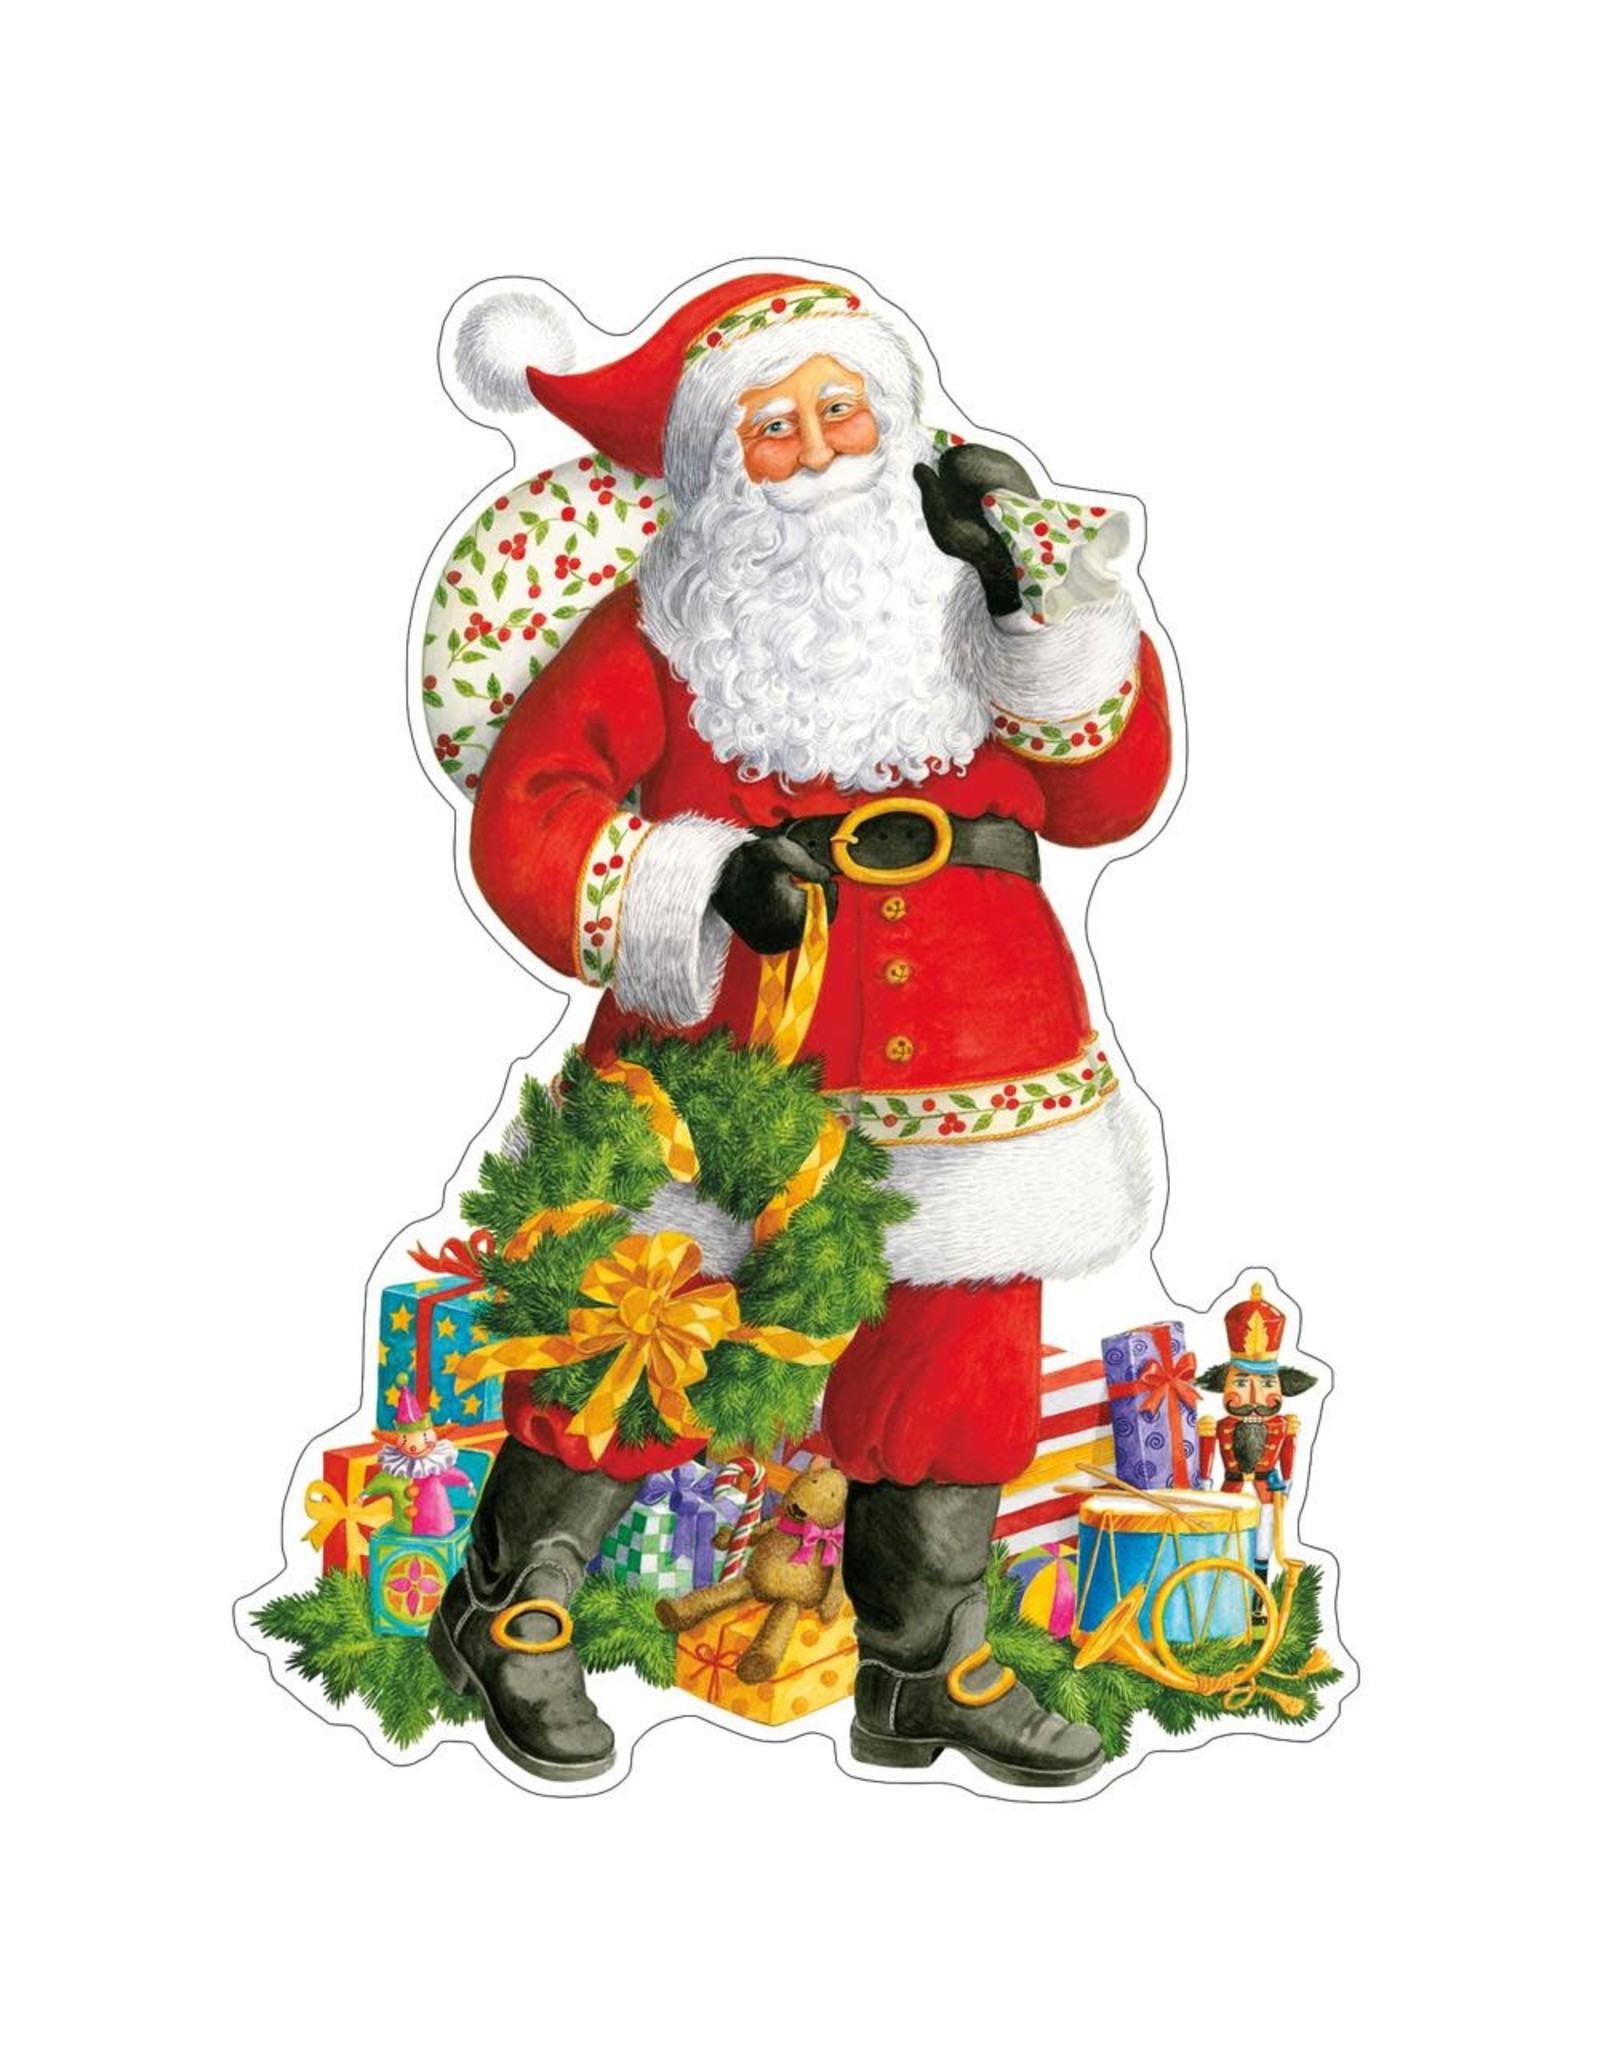 Caspari Ornament Gift Tags 4pk Die-Cut Christmas Santa Jolly St Nick